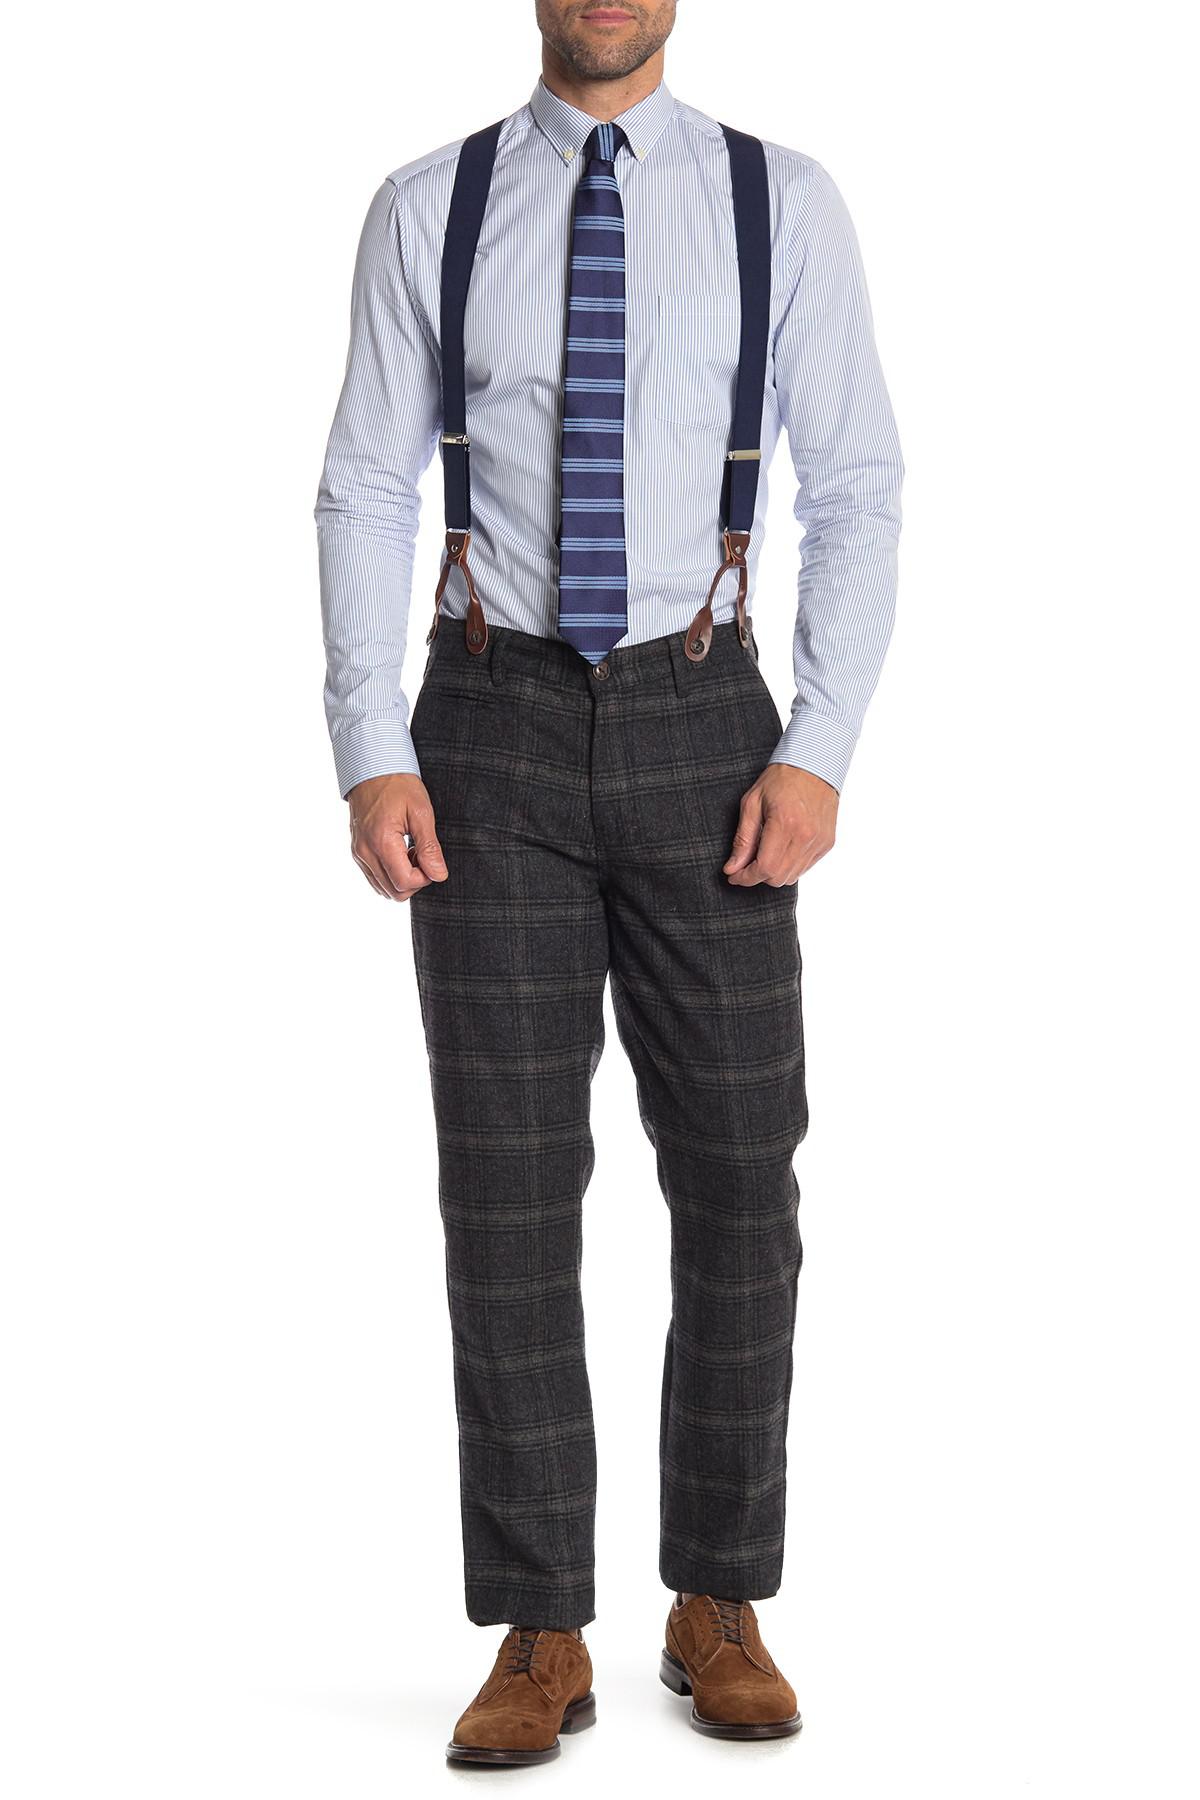 Overalls Suspenders Braces Pants Men's Retro Casual Work Trousers Khaki  Pants | eBay